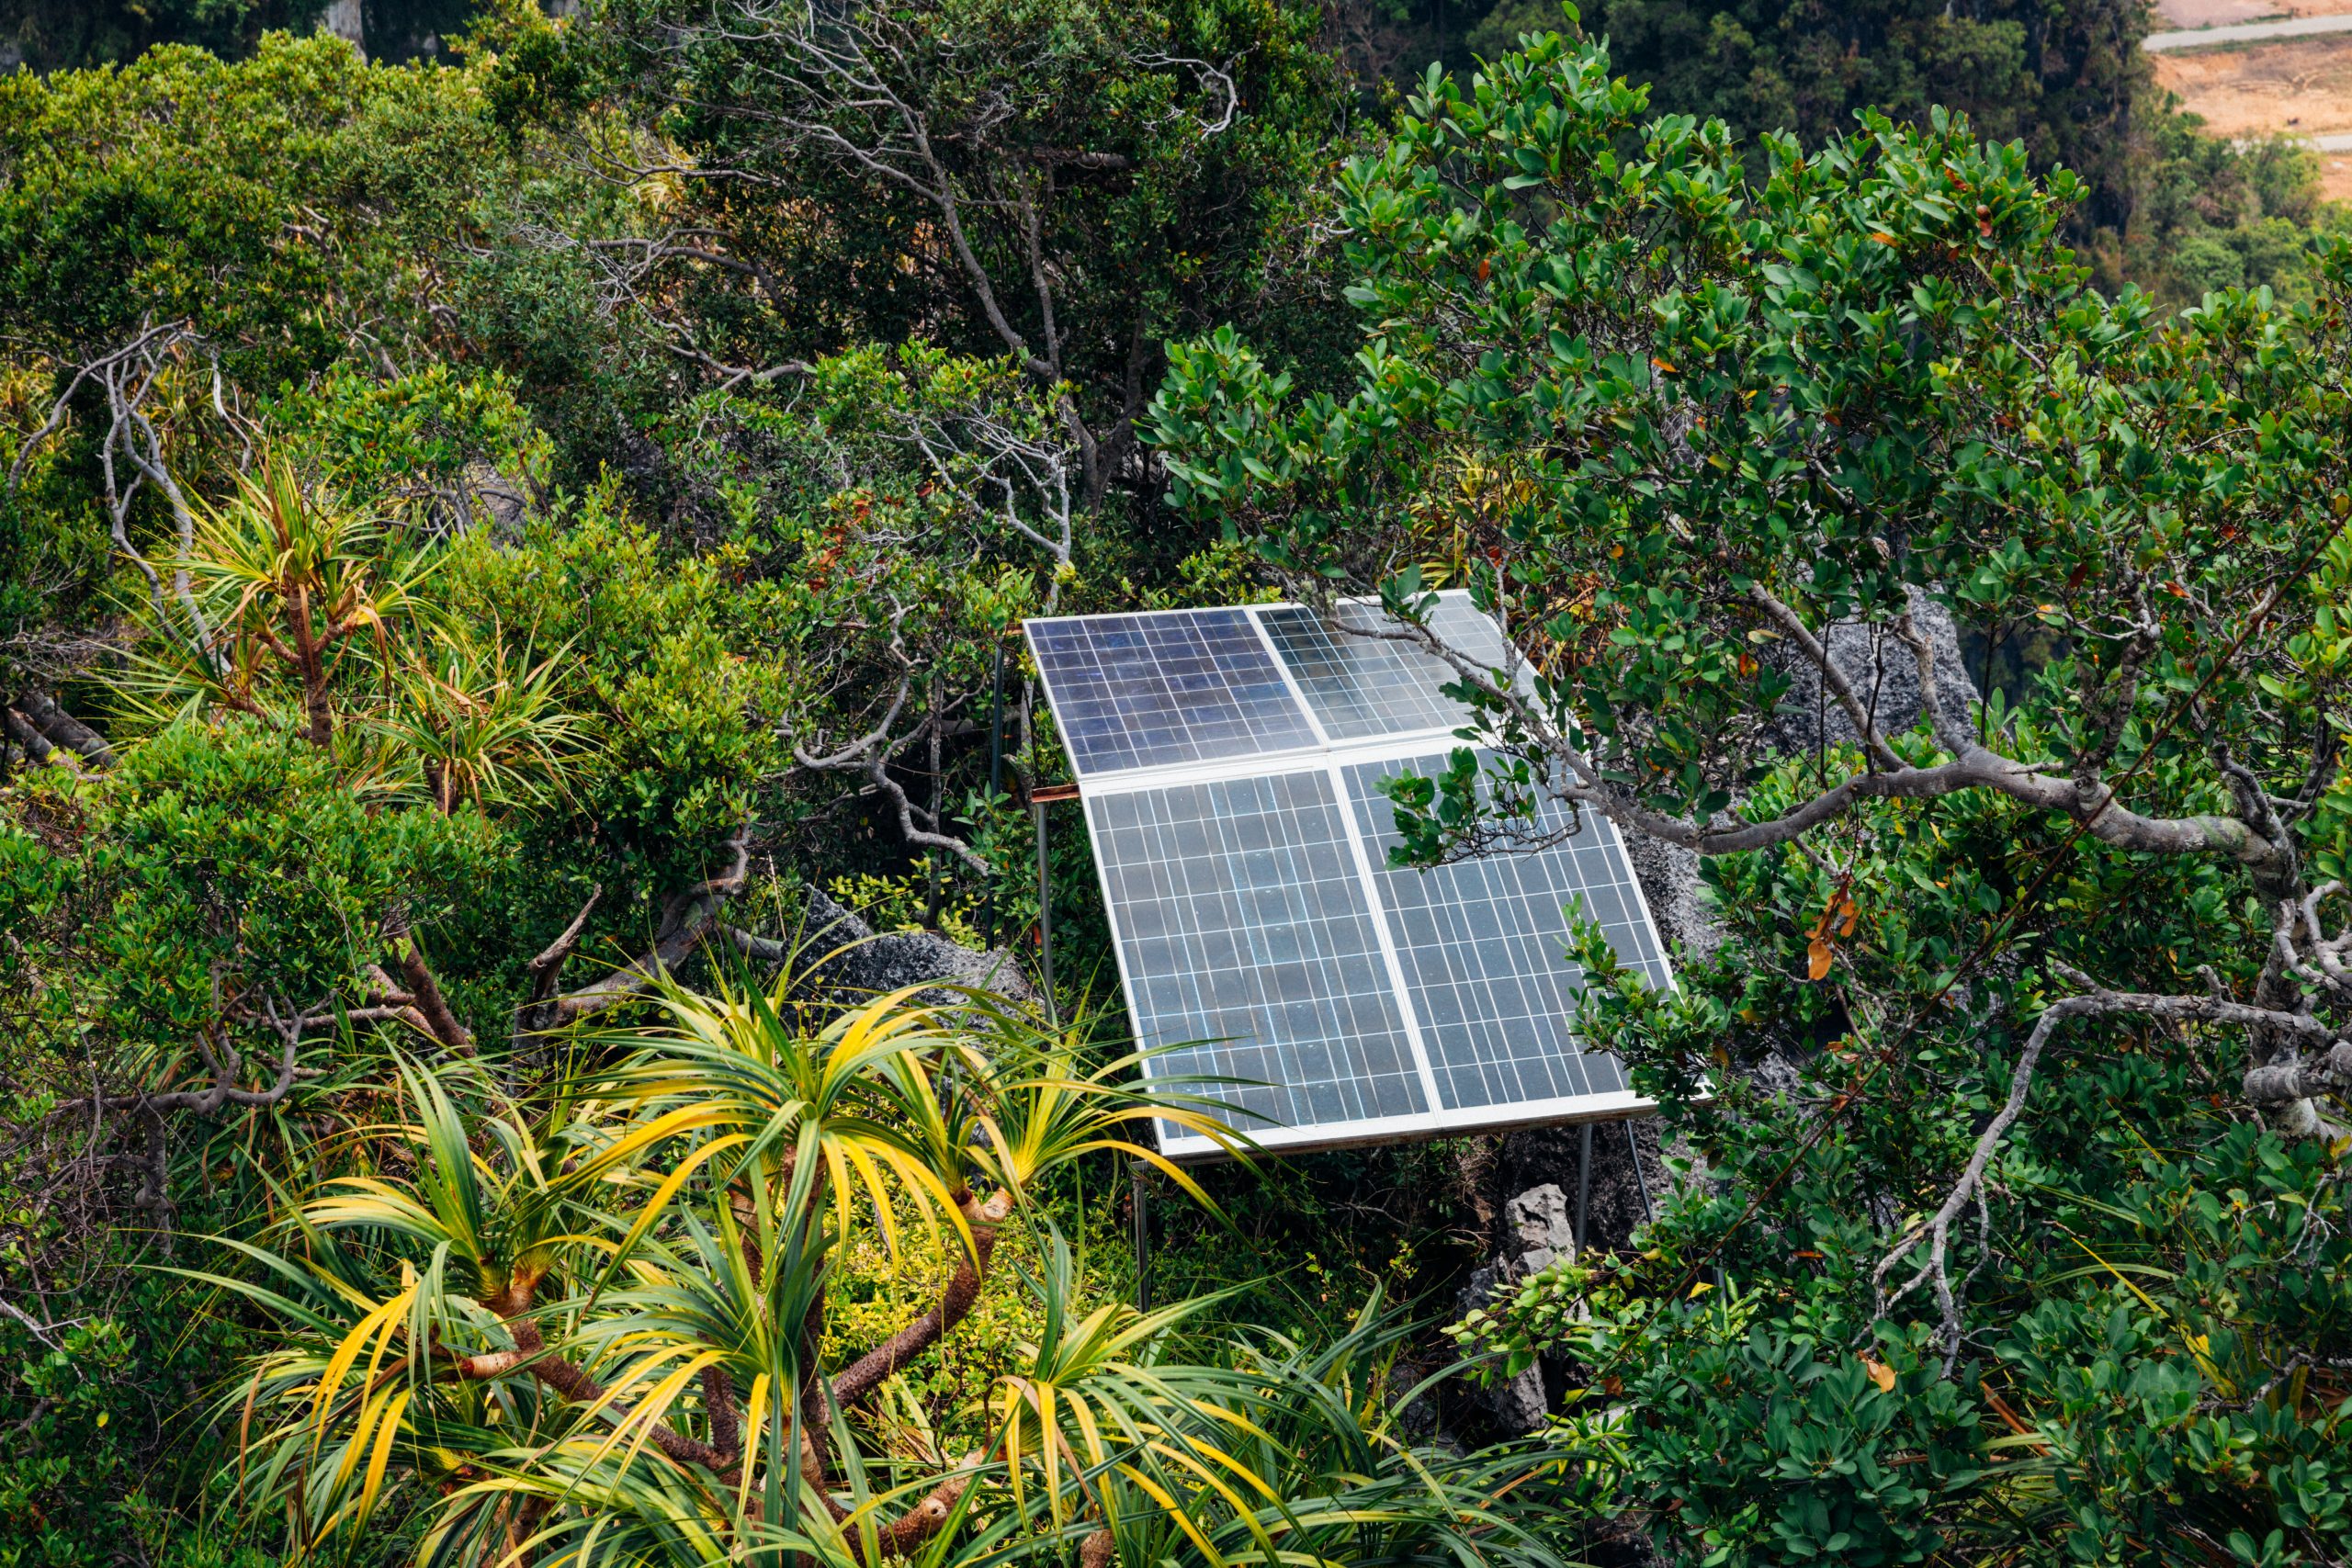 Solar panels among trees